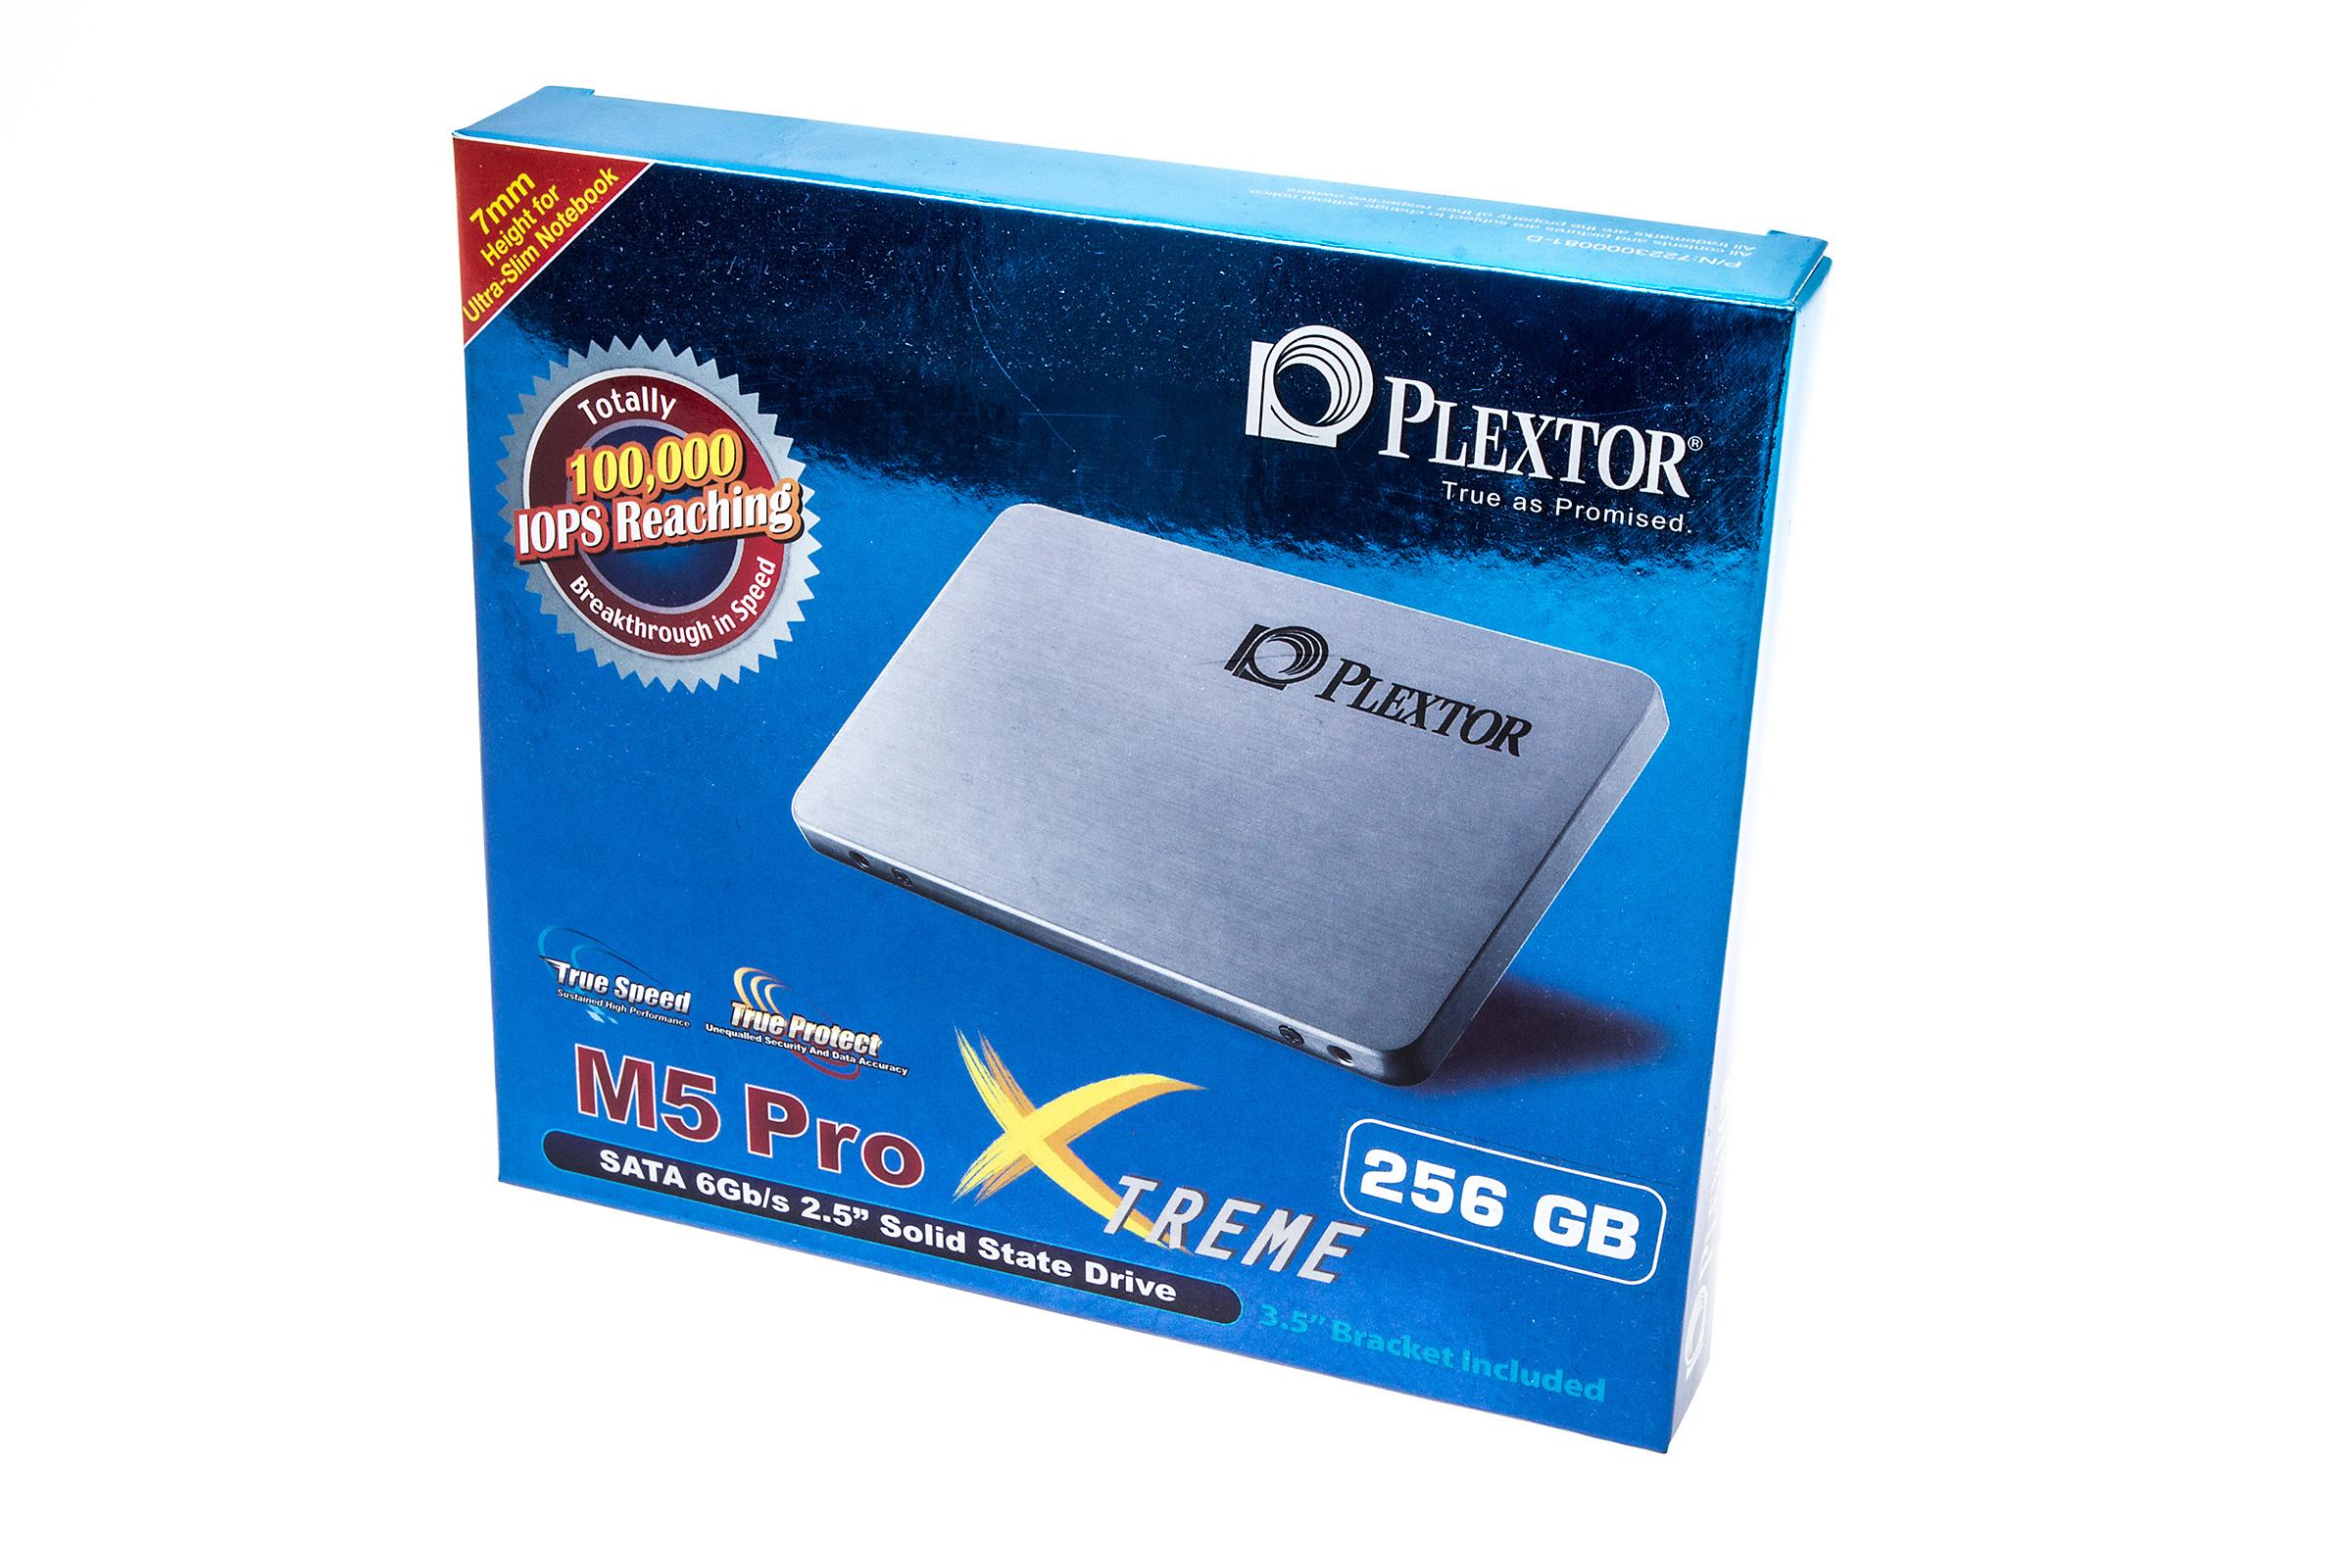 Plextor M5 Pro Xtreme SSD 256 GB: Produkteske.Foto: Varg Aamo, Hardware.no